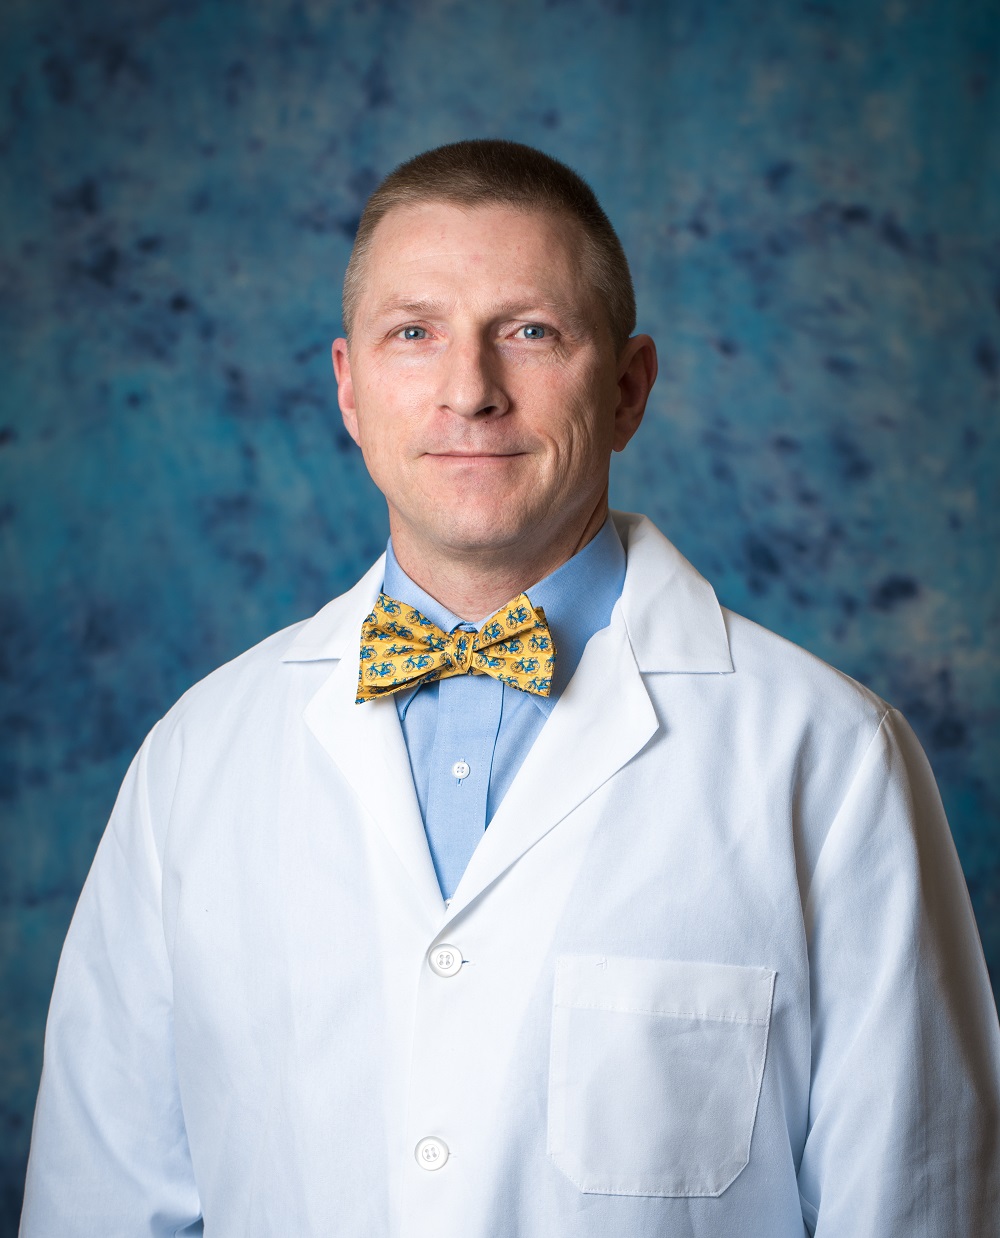 Matthew D. Bridges, MD of Roane Surgical Group